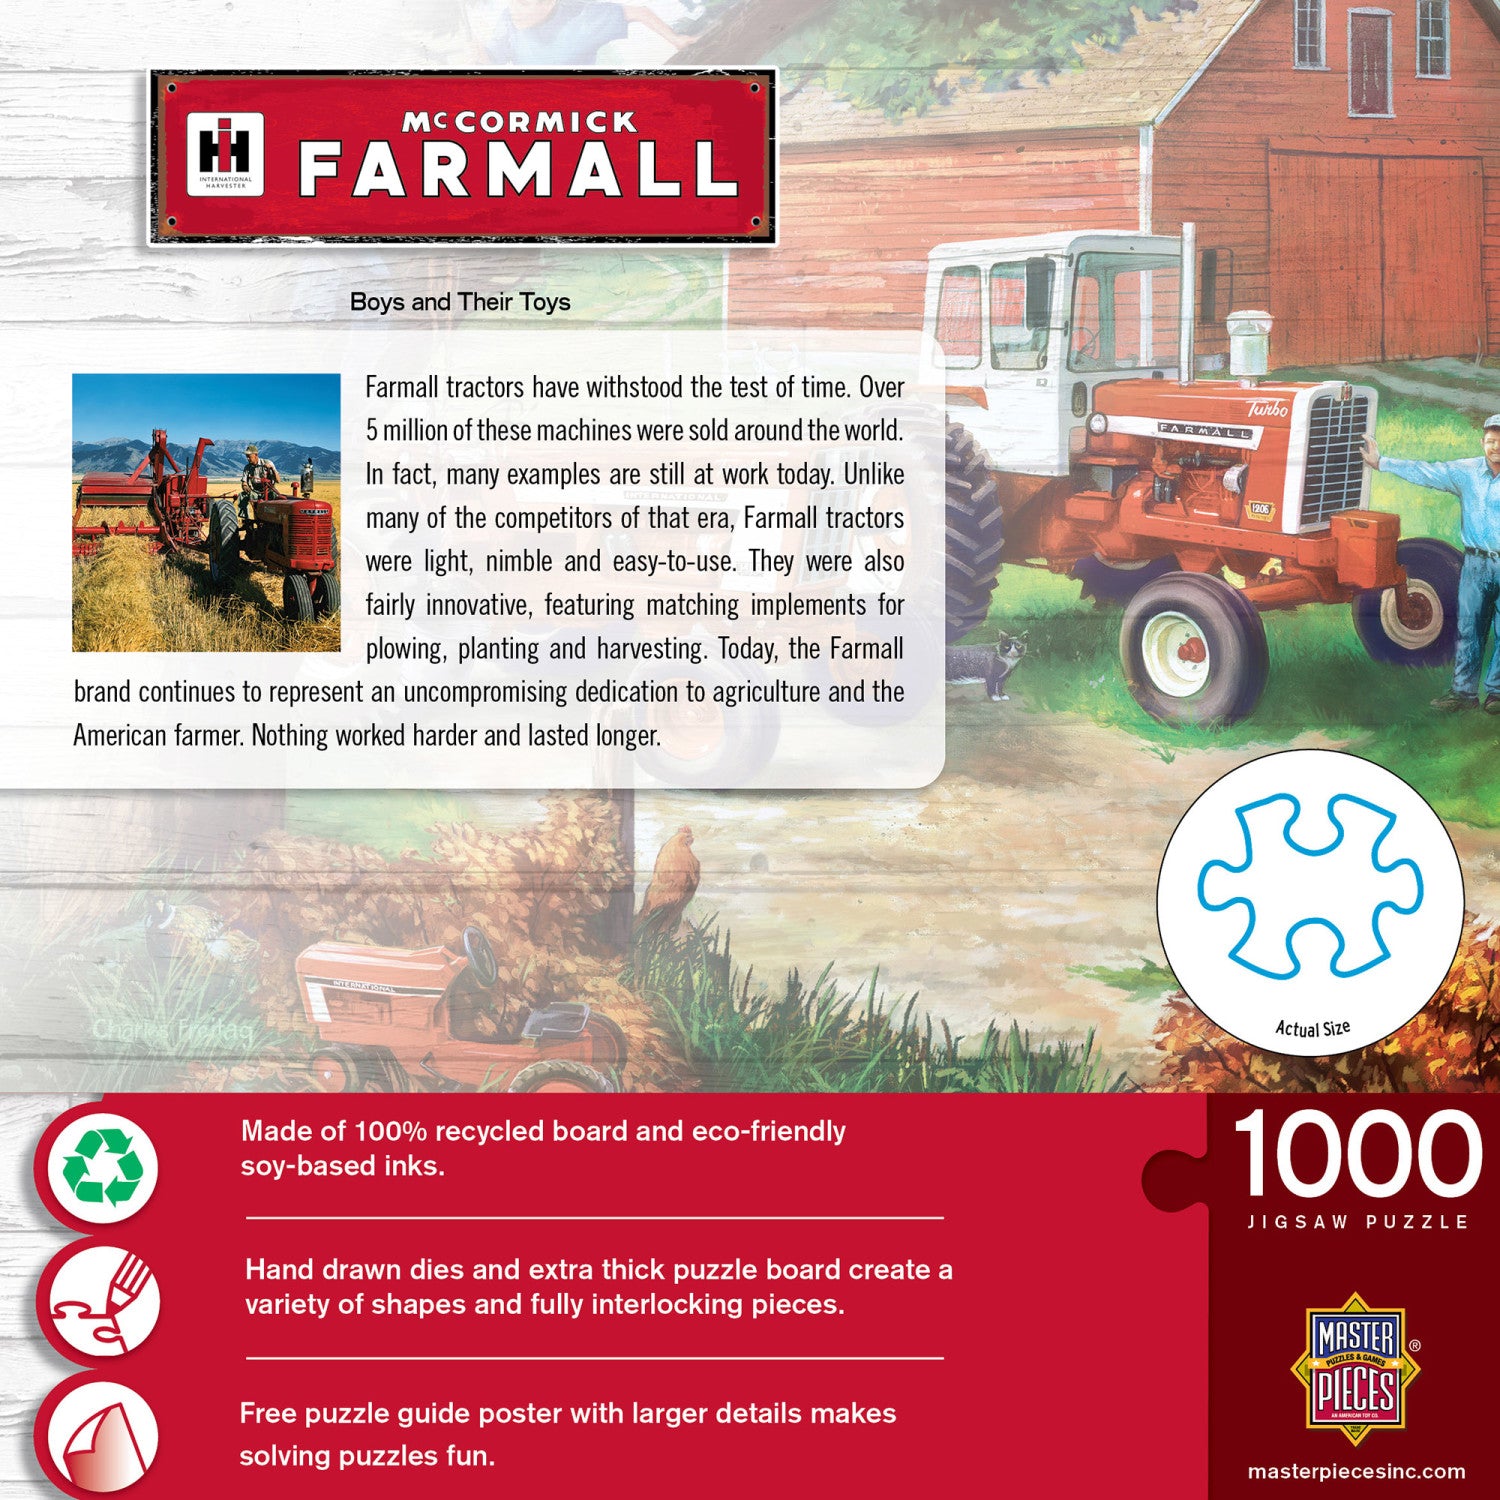 Farmall - Boys and Their Toys 1000 Piece Puzzle